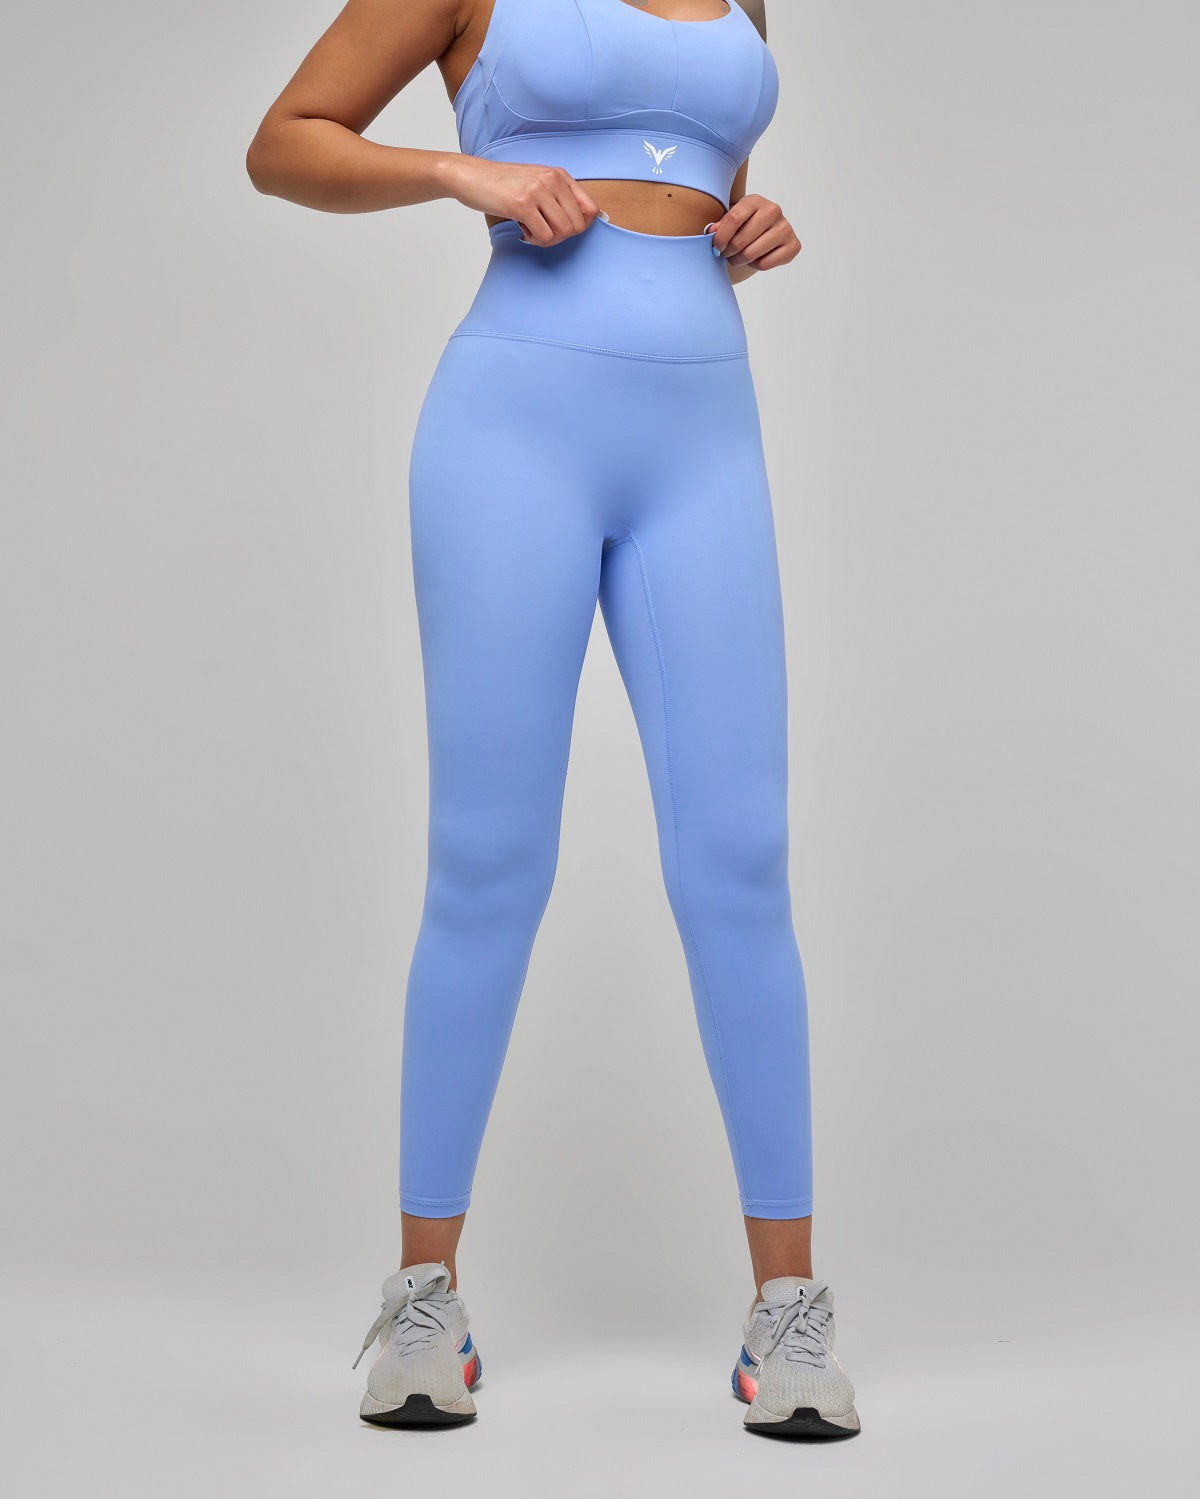 Women's Blue Solid Nylon Activewear Legging